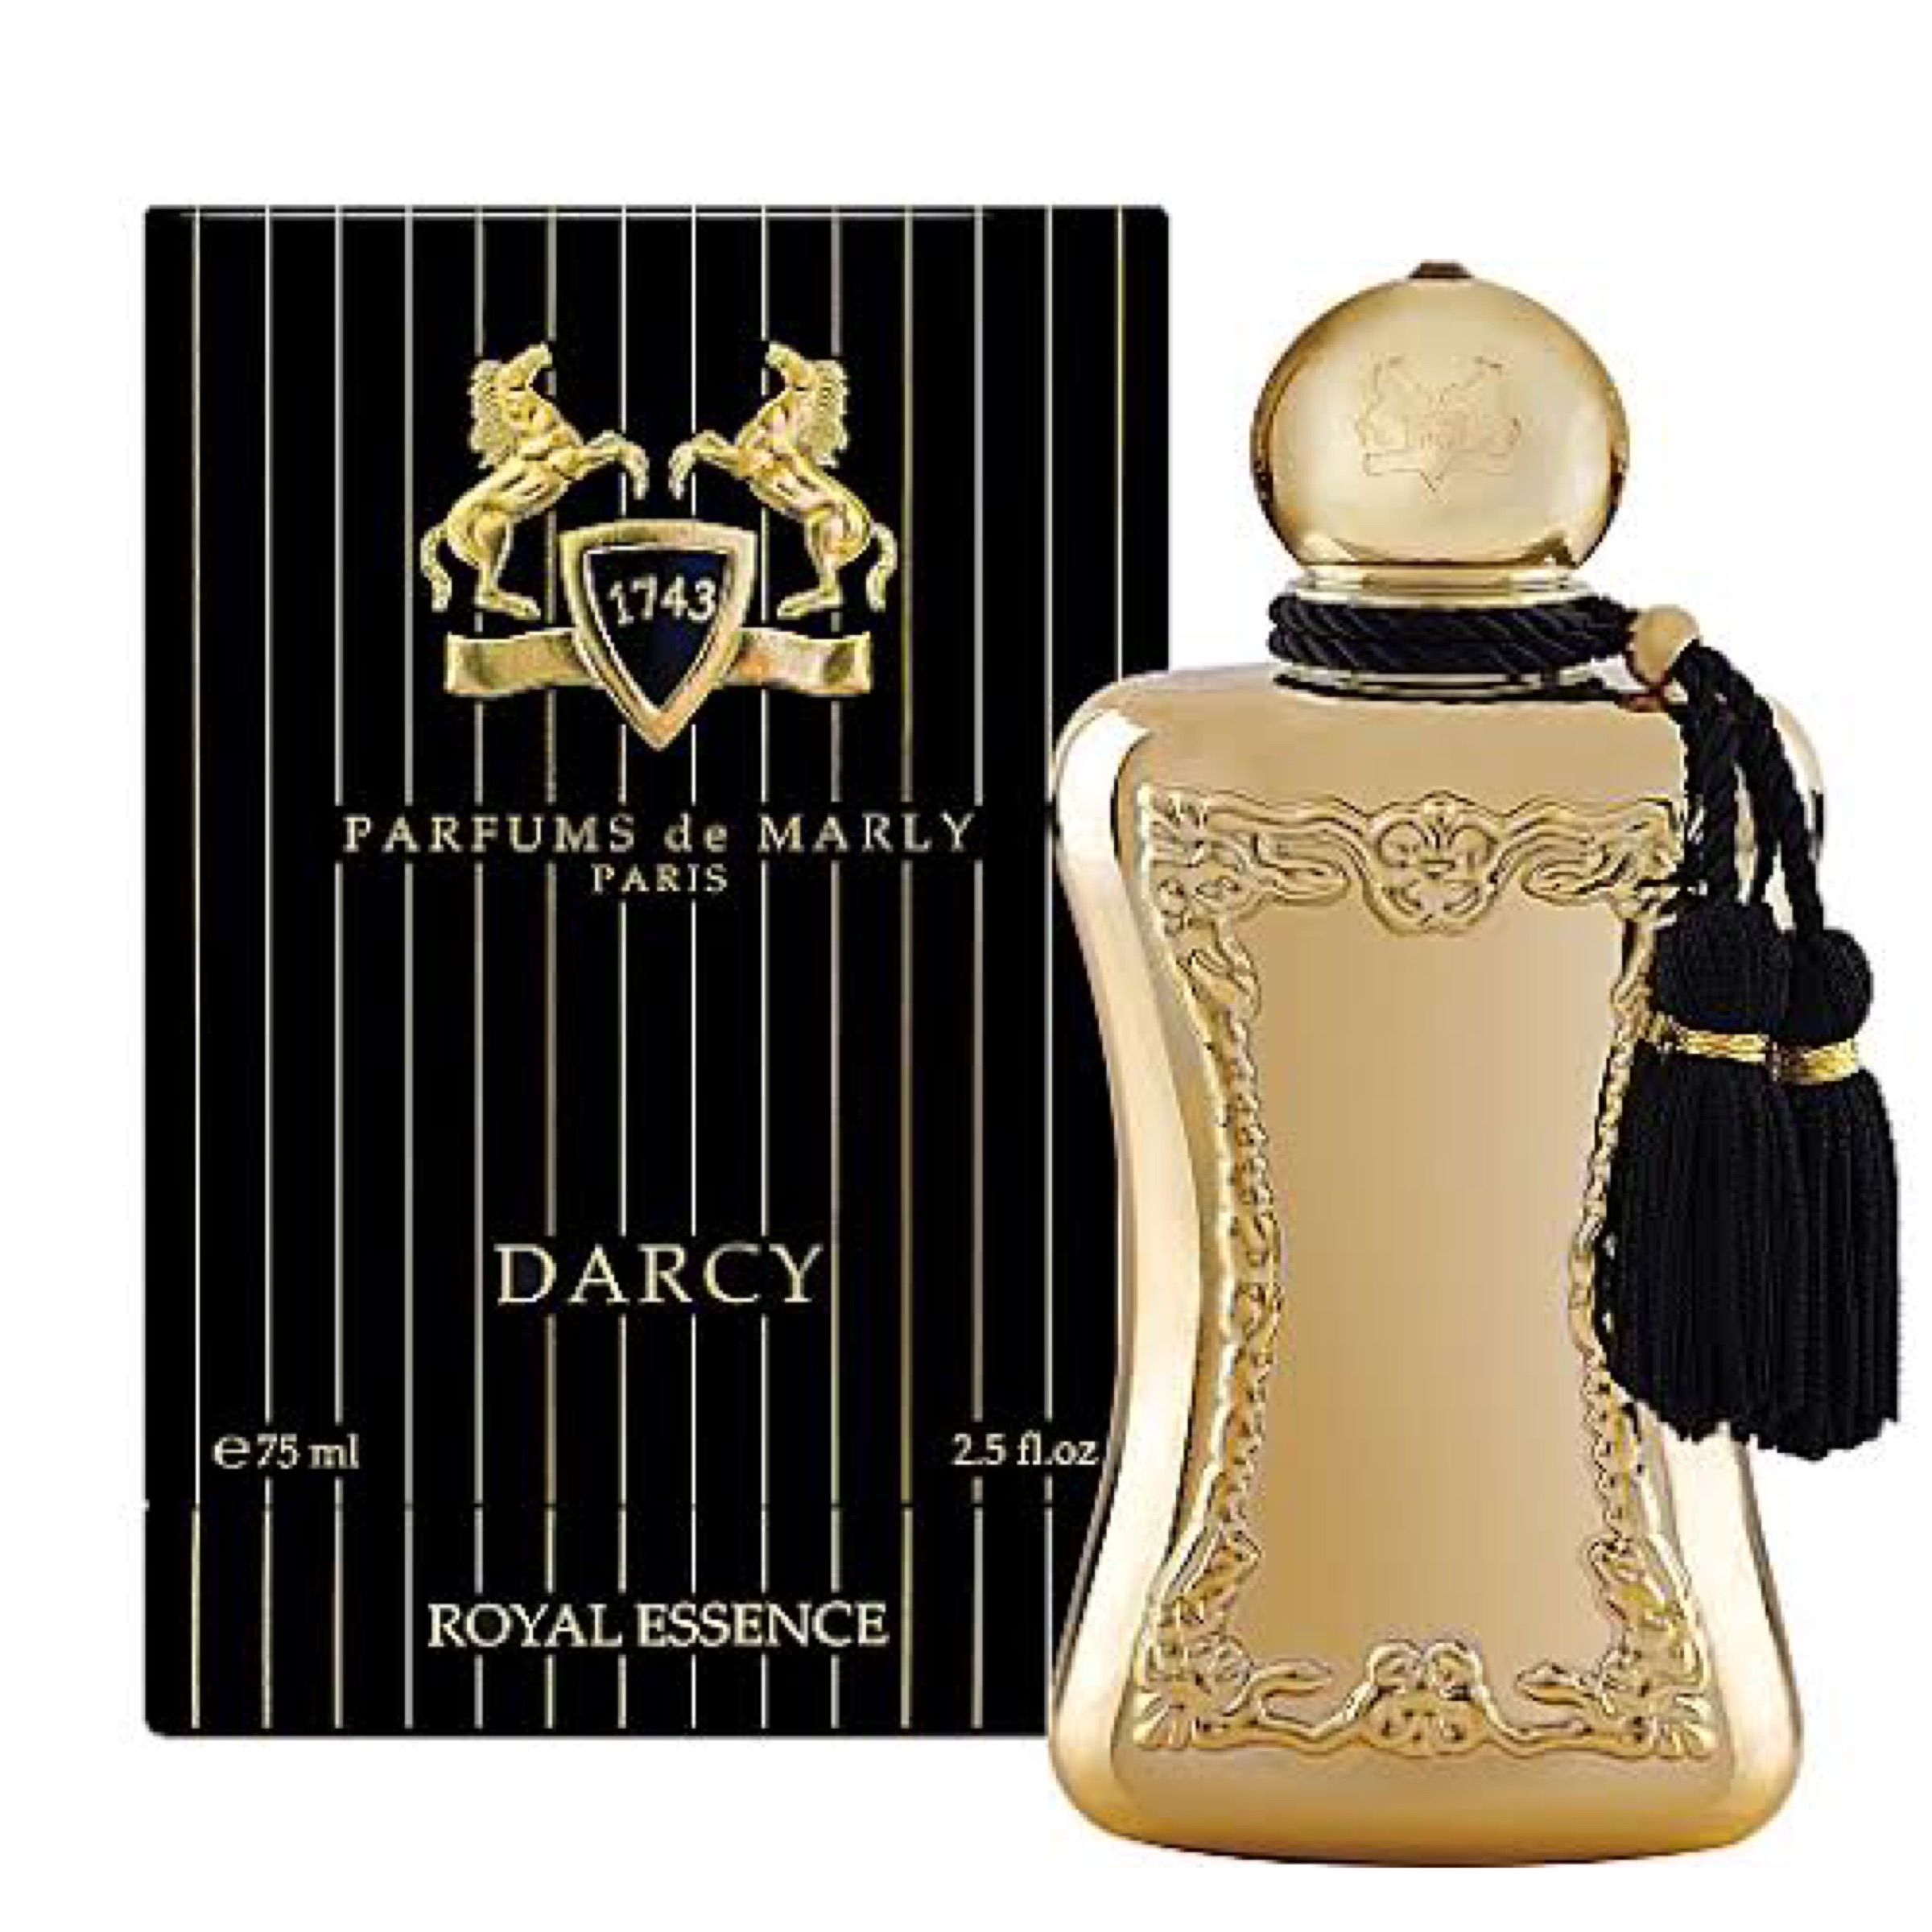 Royal essence. Parfums de Marly Godolphin EDP (125 мл). Parfums de Marly Darcy 75 мл. Parfums de Marly духи, 75 мл. Парфюмерная вода Parfums de Marly Darcy.